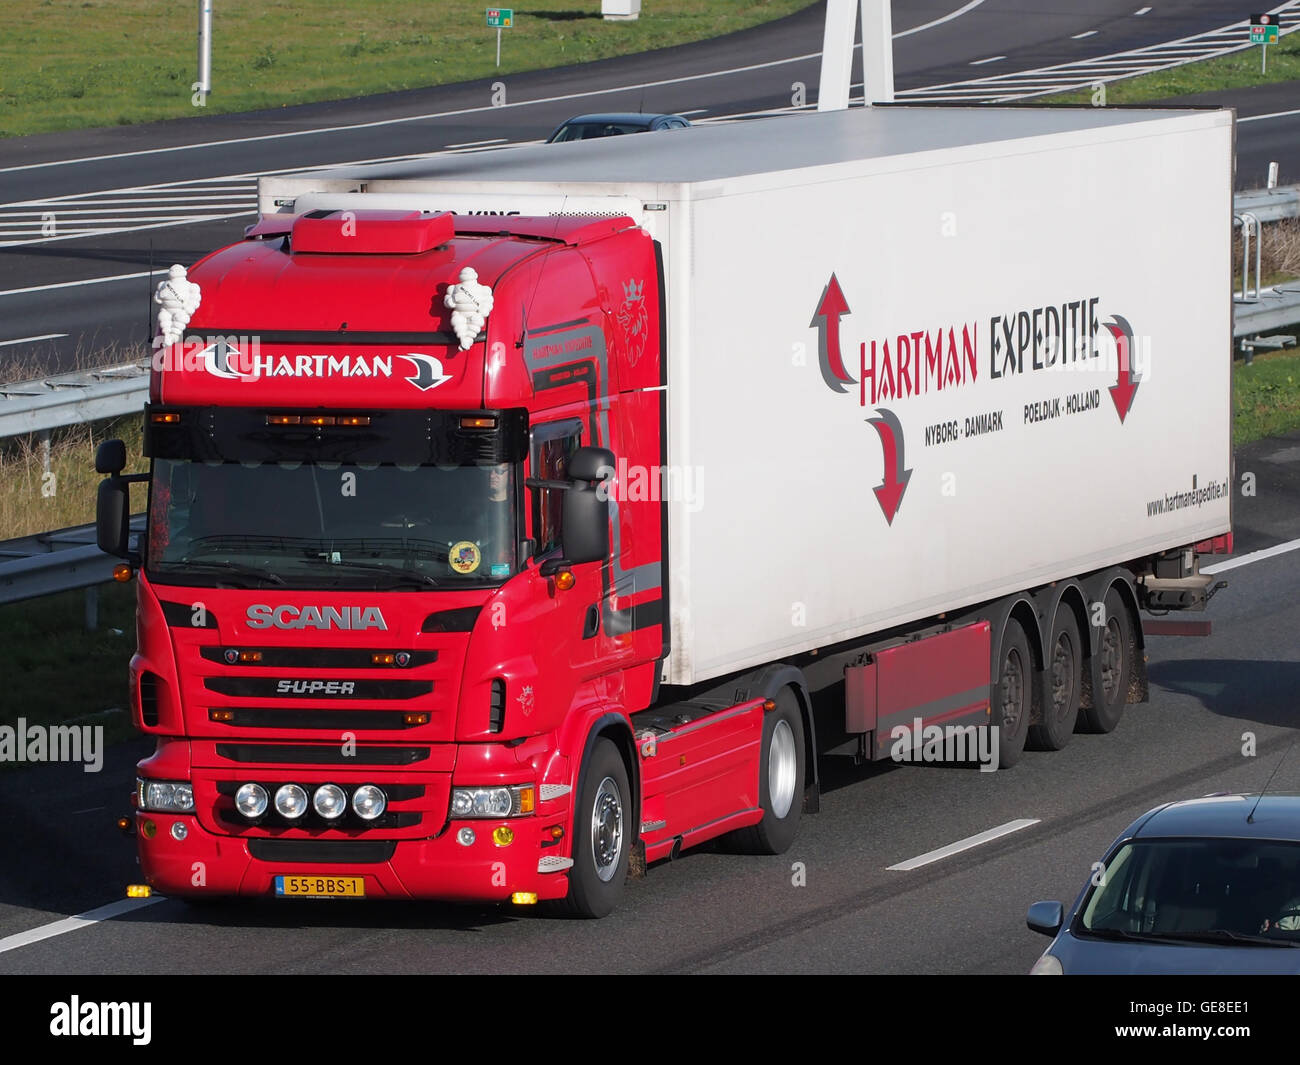 Super Scania, Hartman Expeditie Stockfoto